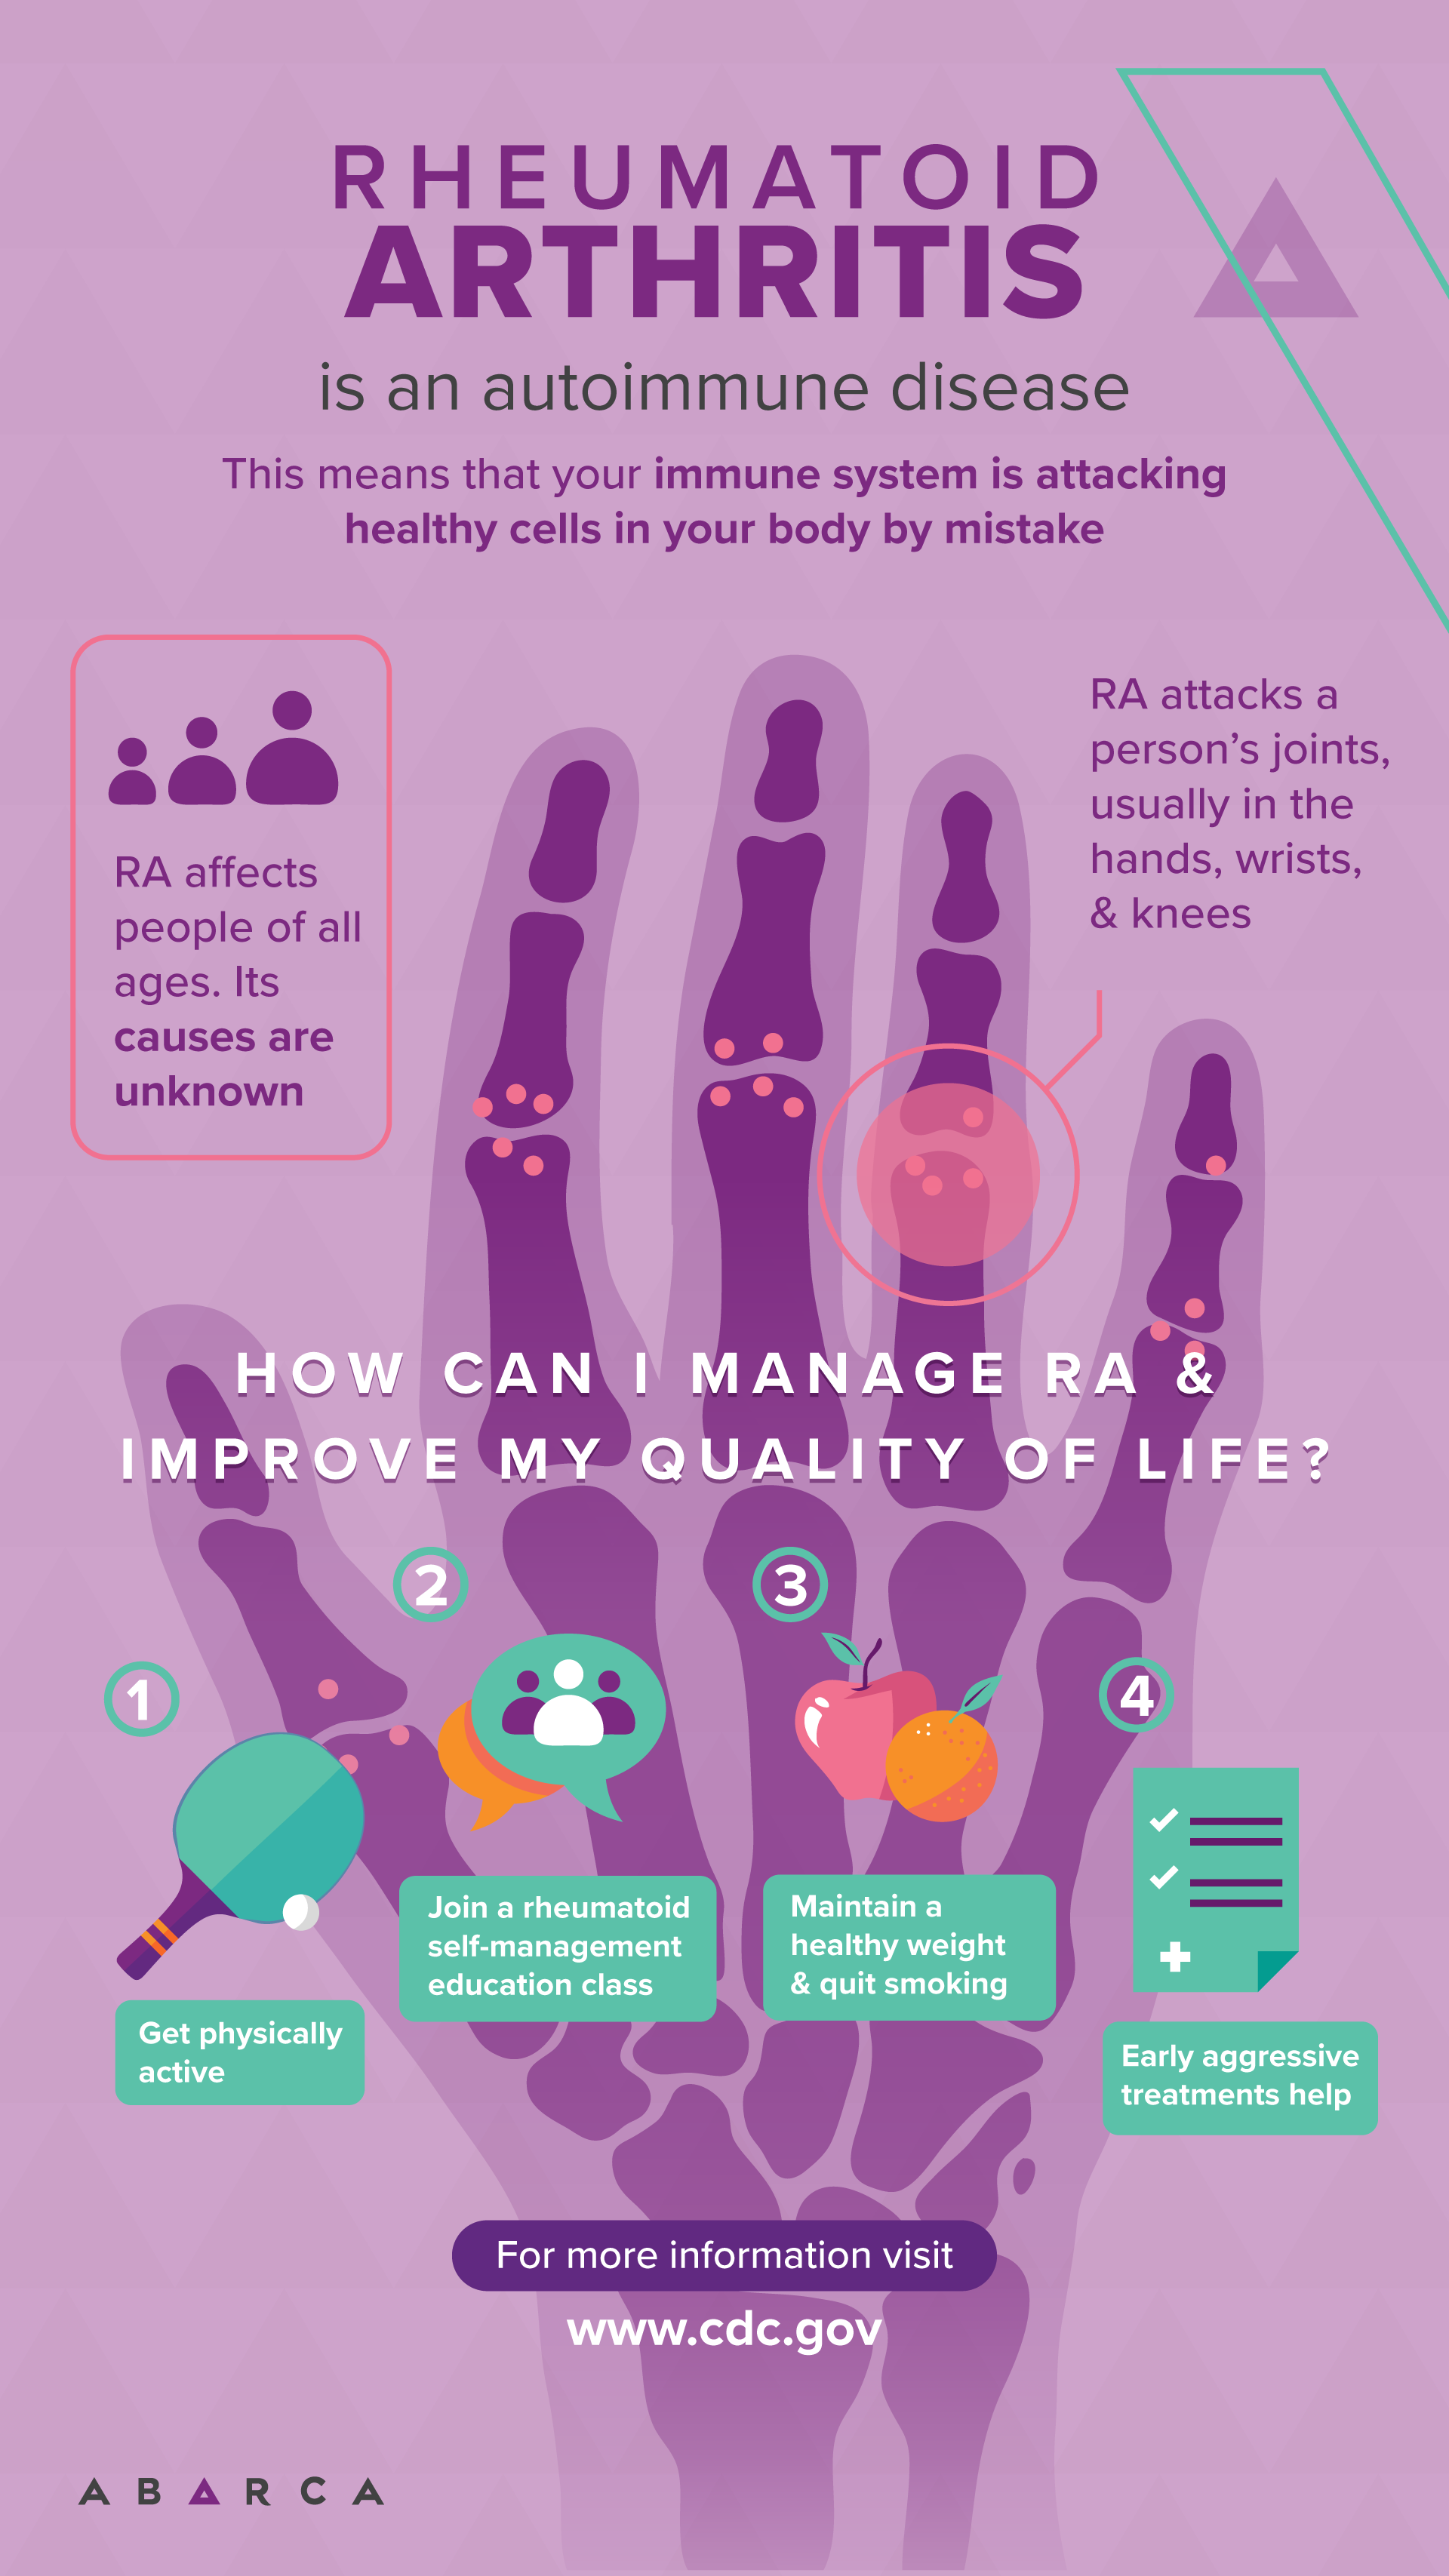 Let's work together in spreading awareness of Rheumatoid Arthritis